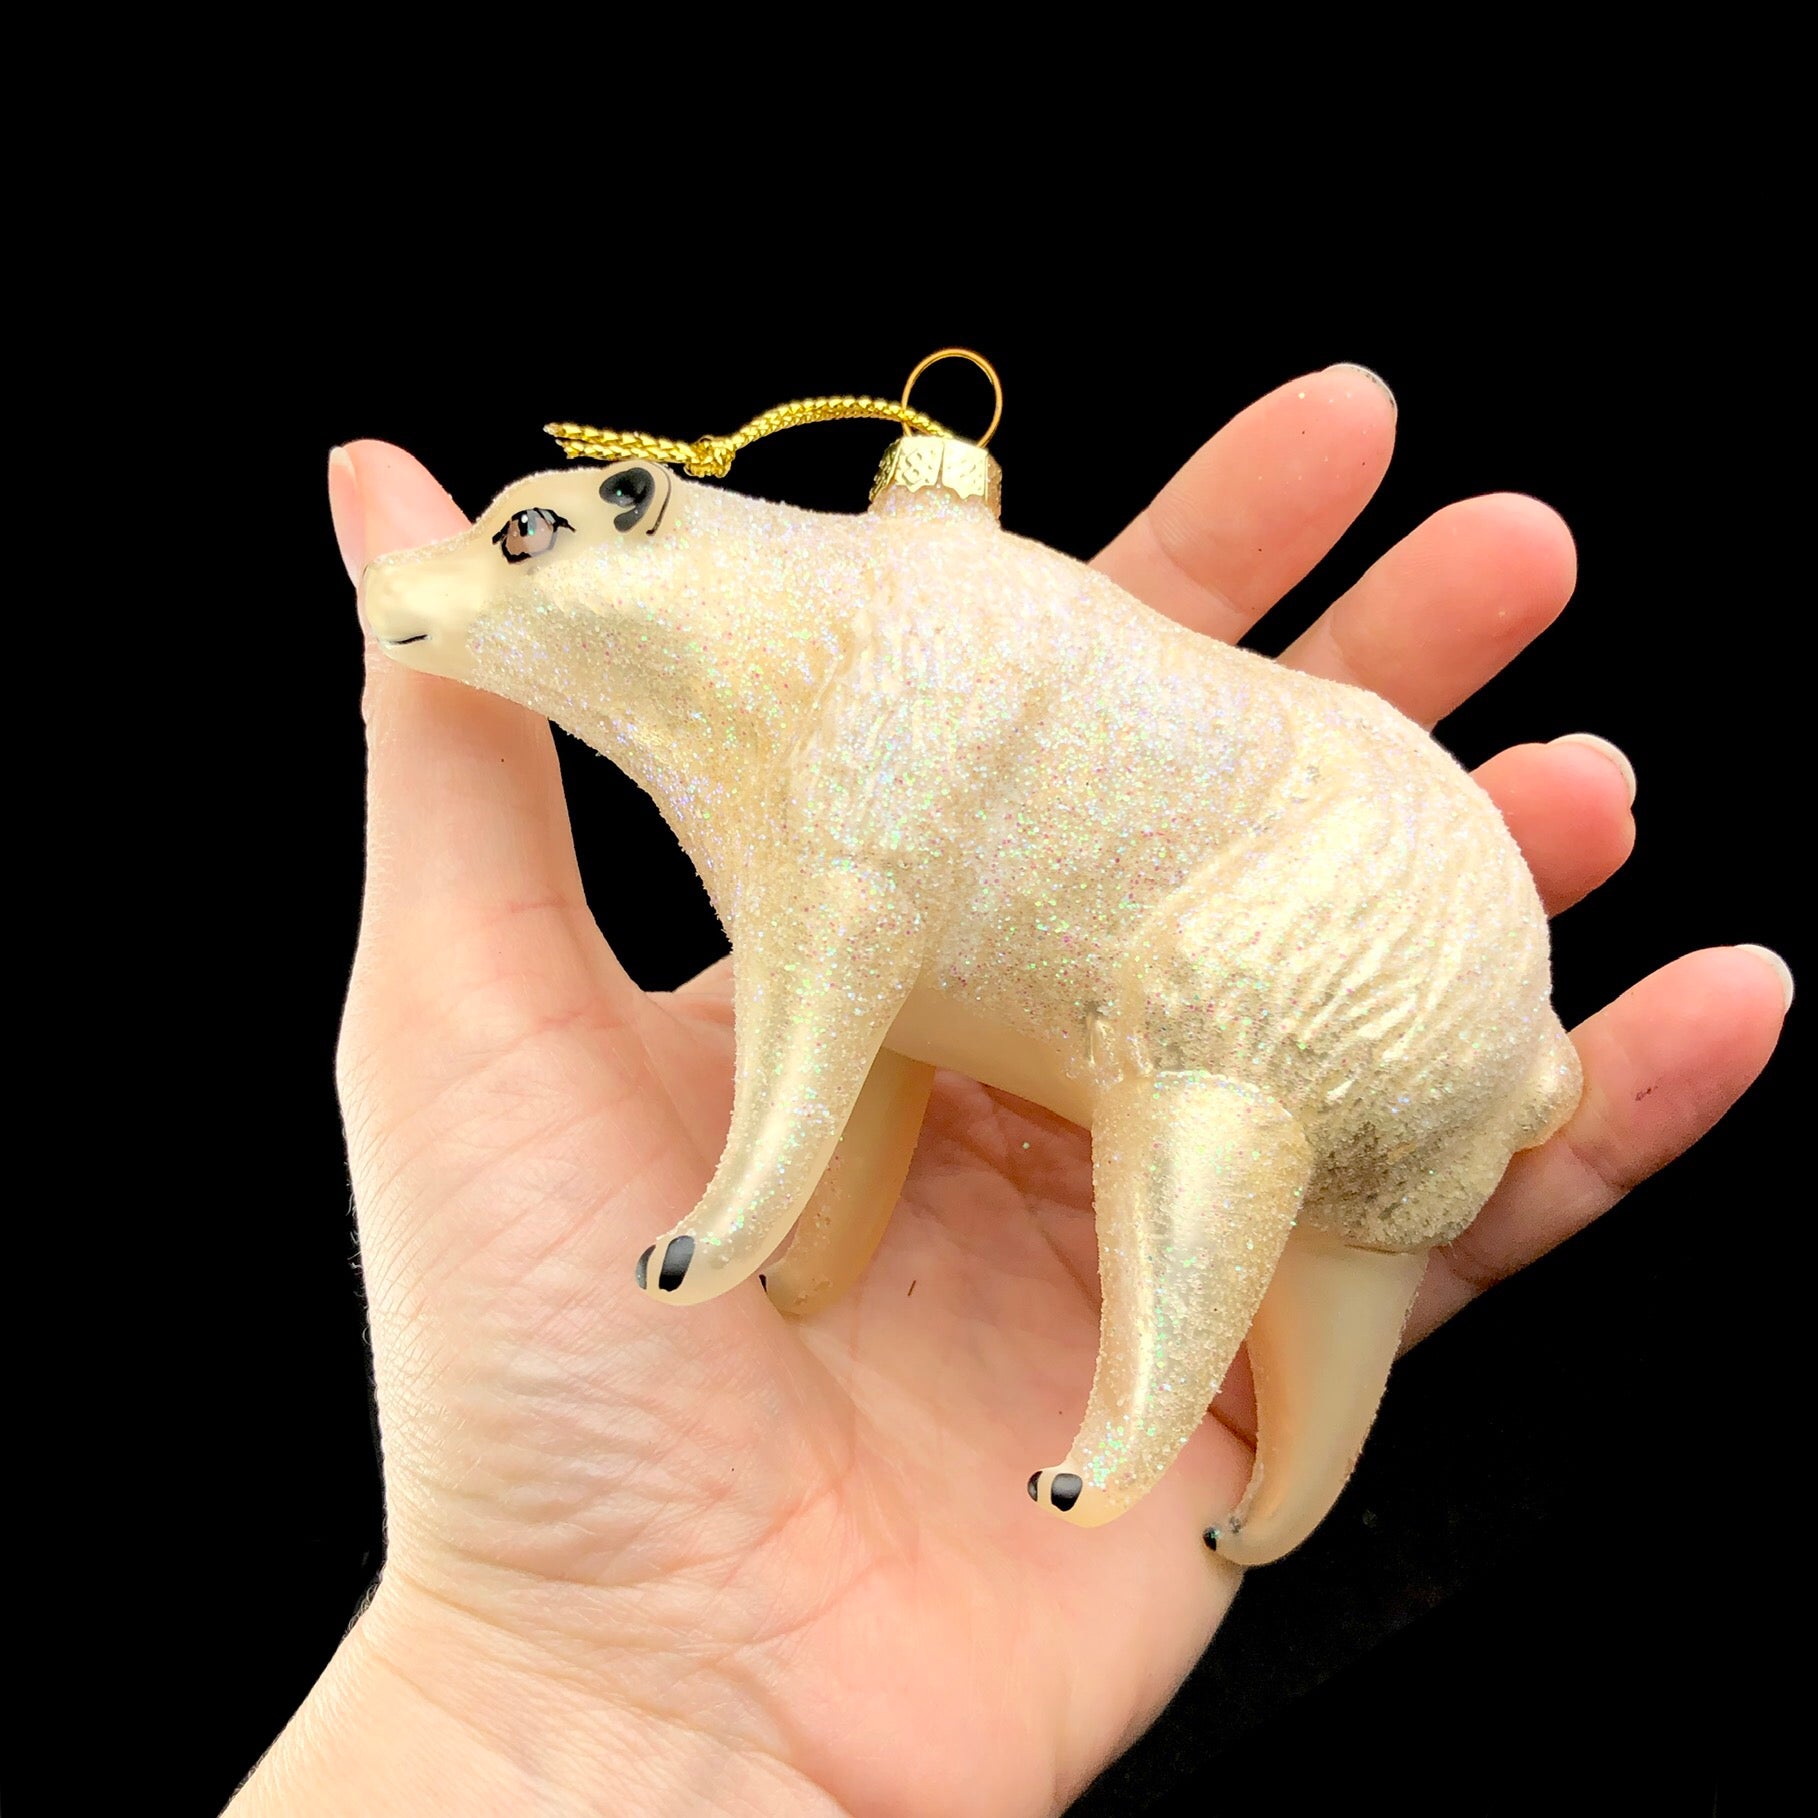 Polar Bear Ornament shown in hand